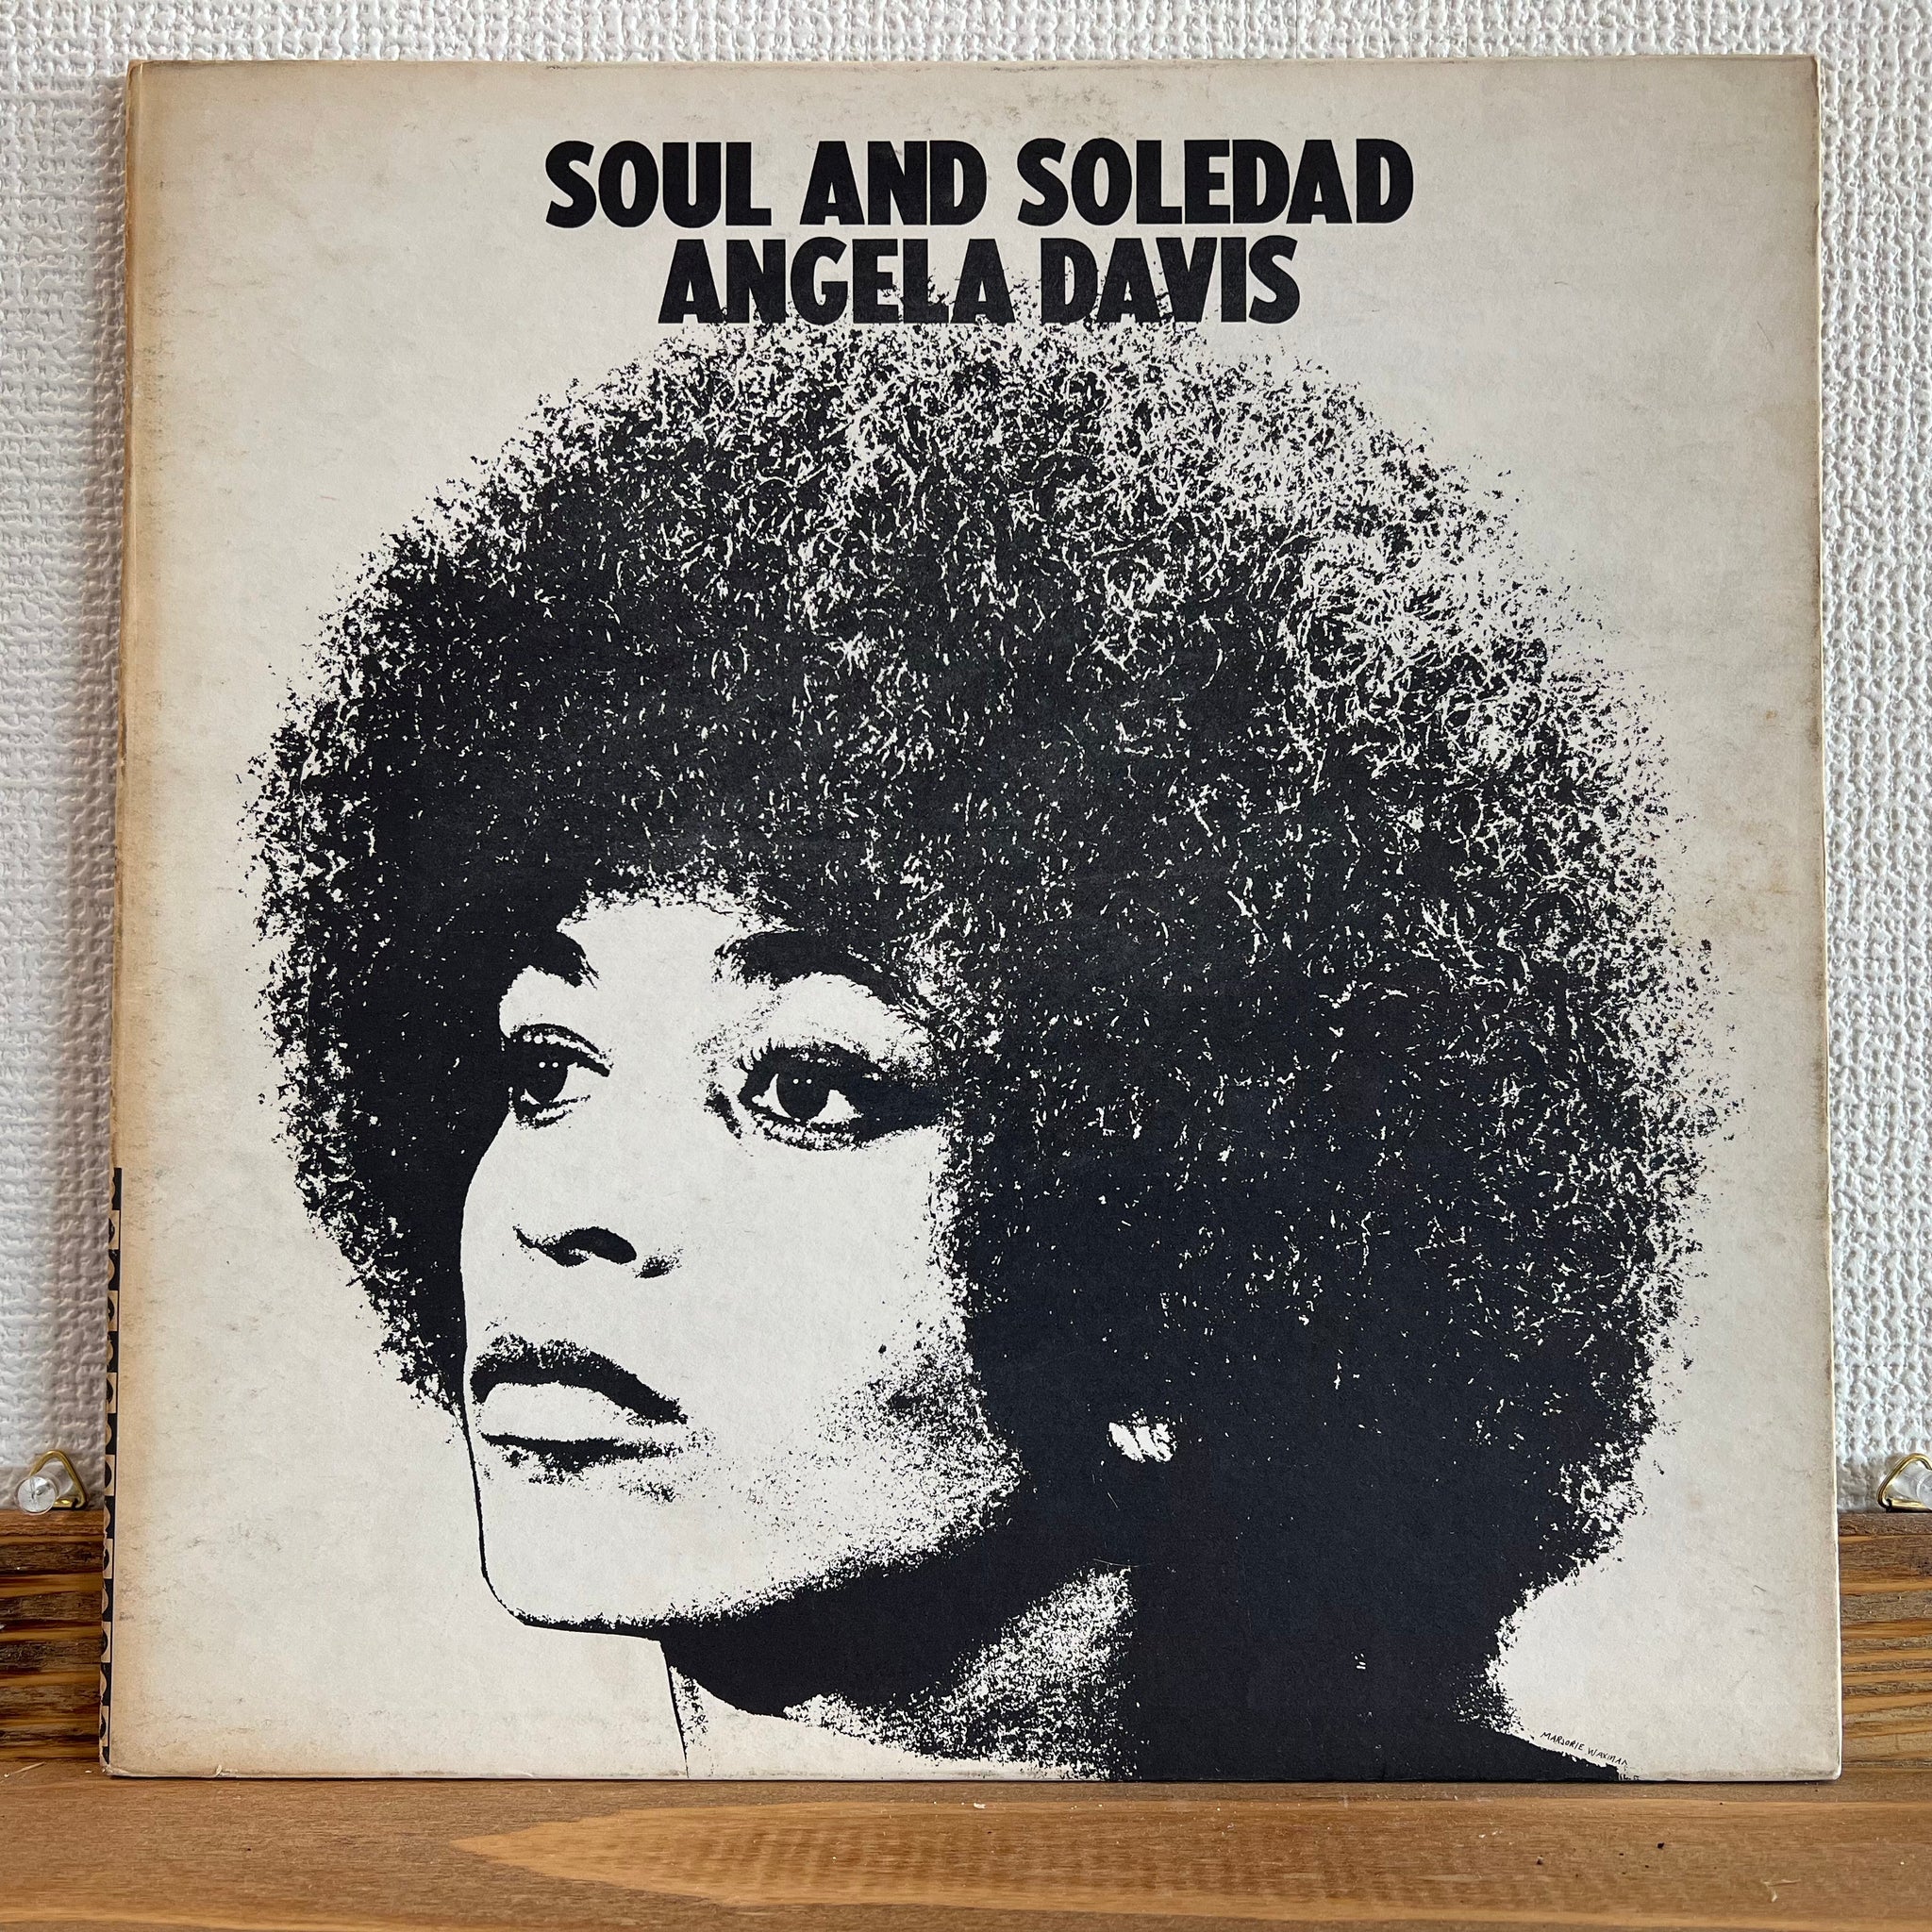 Angela Davis - Soul And Soledad